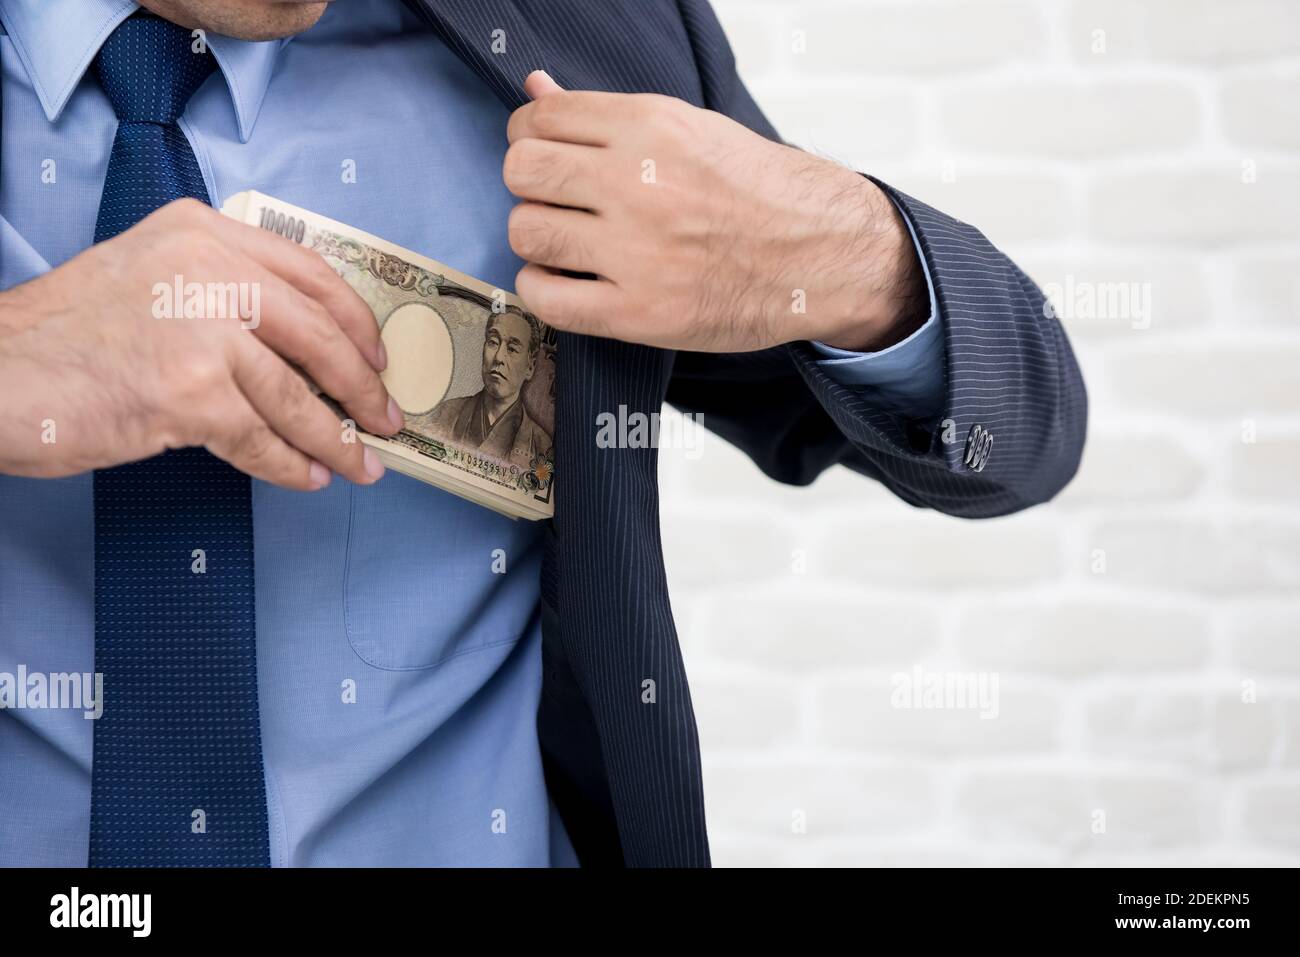 Businessman putting money, Japanese yen banknotes, into his suit pocket - corruption concept Stock Photo